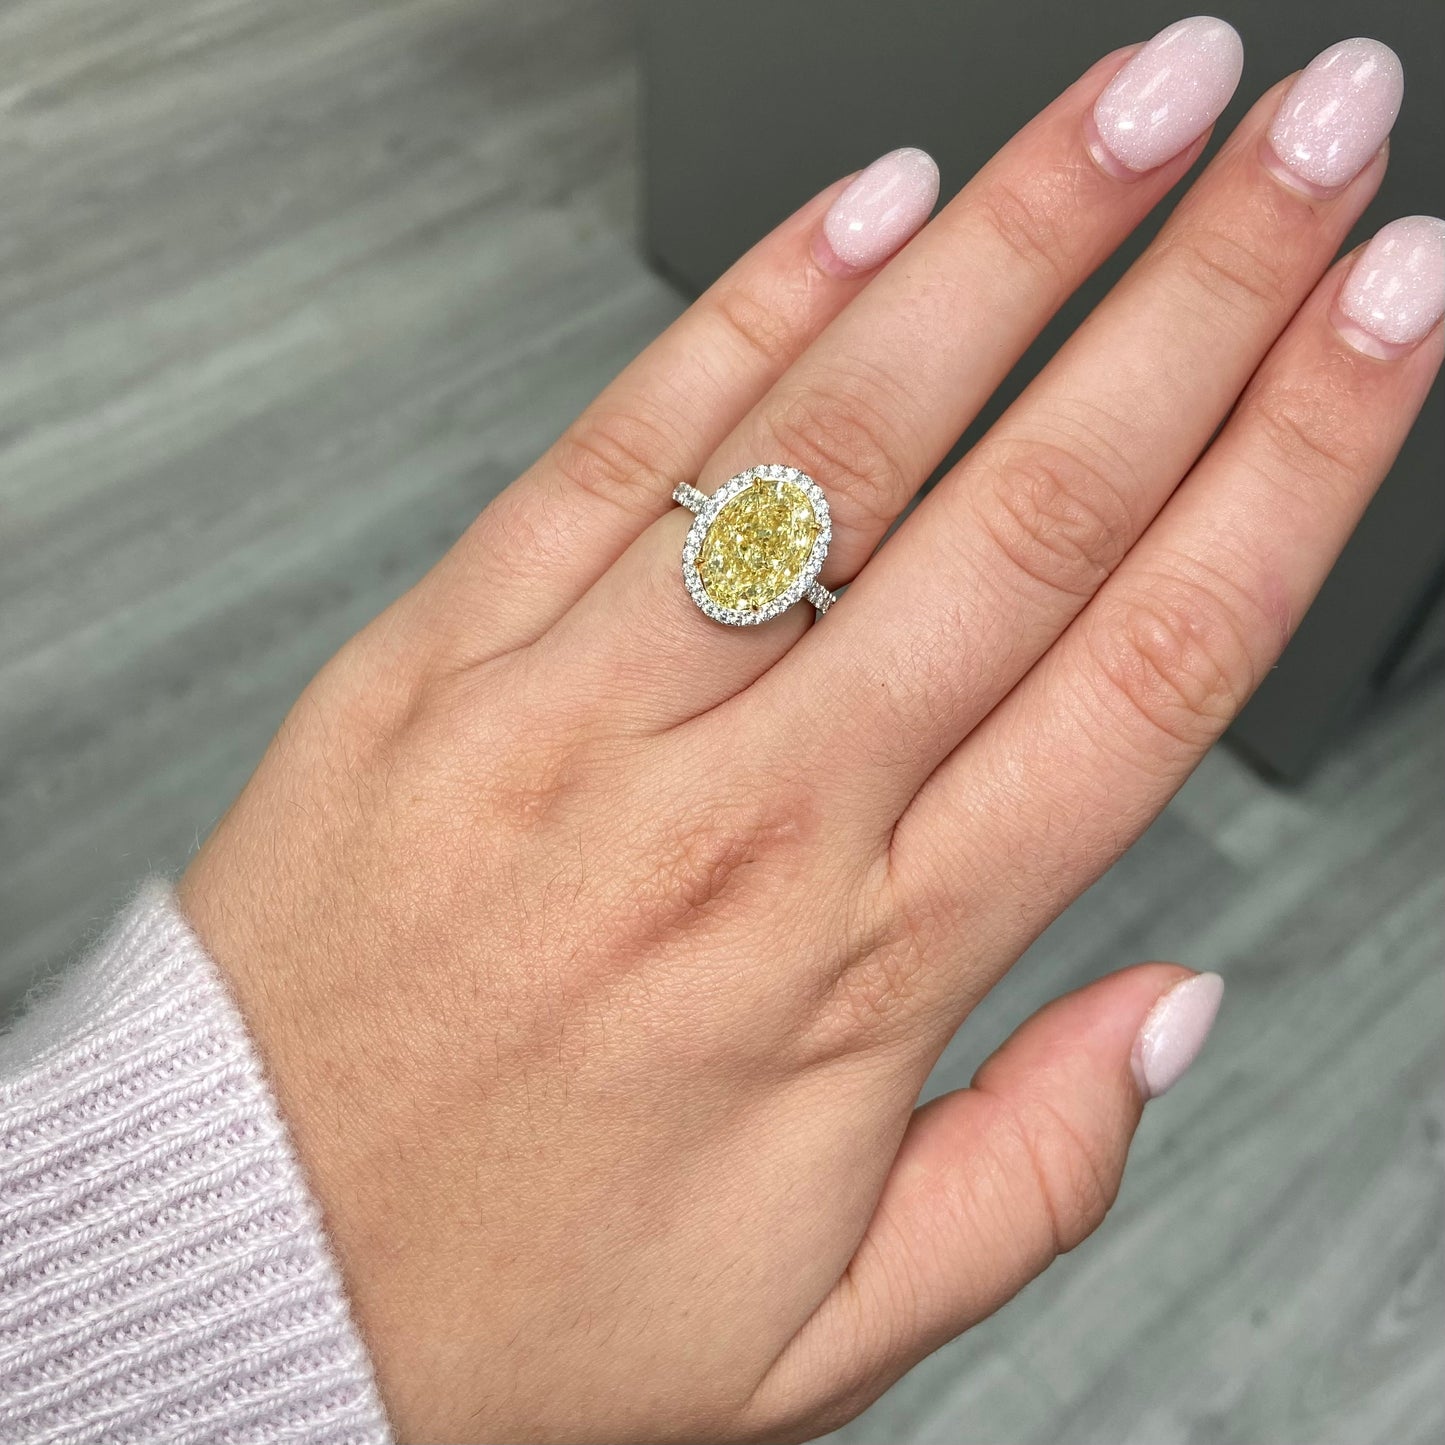 6 carat fancy light yellow diamond oval halo ring